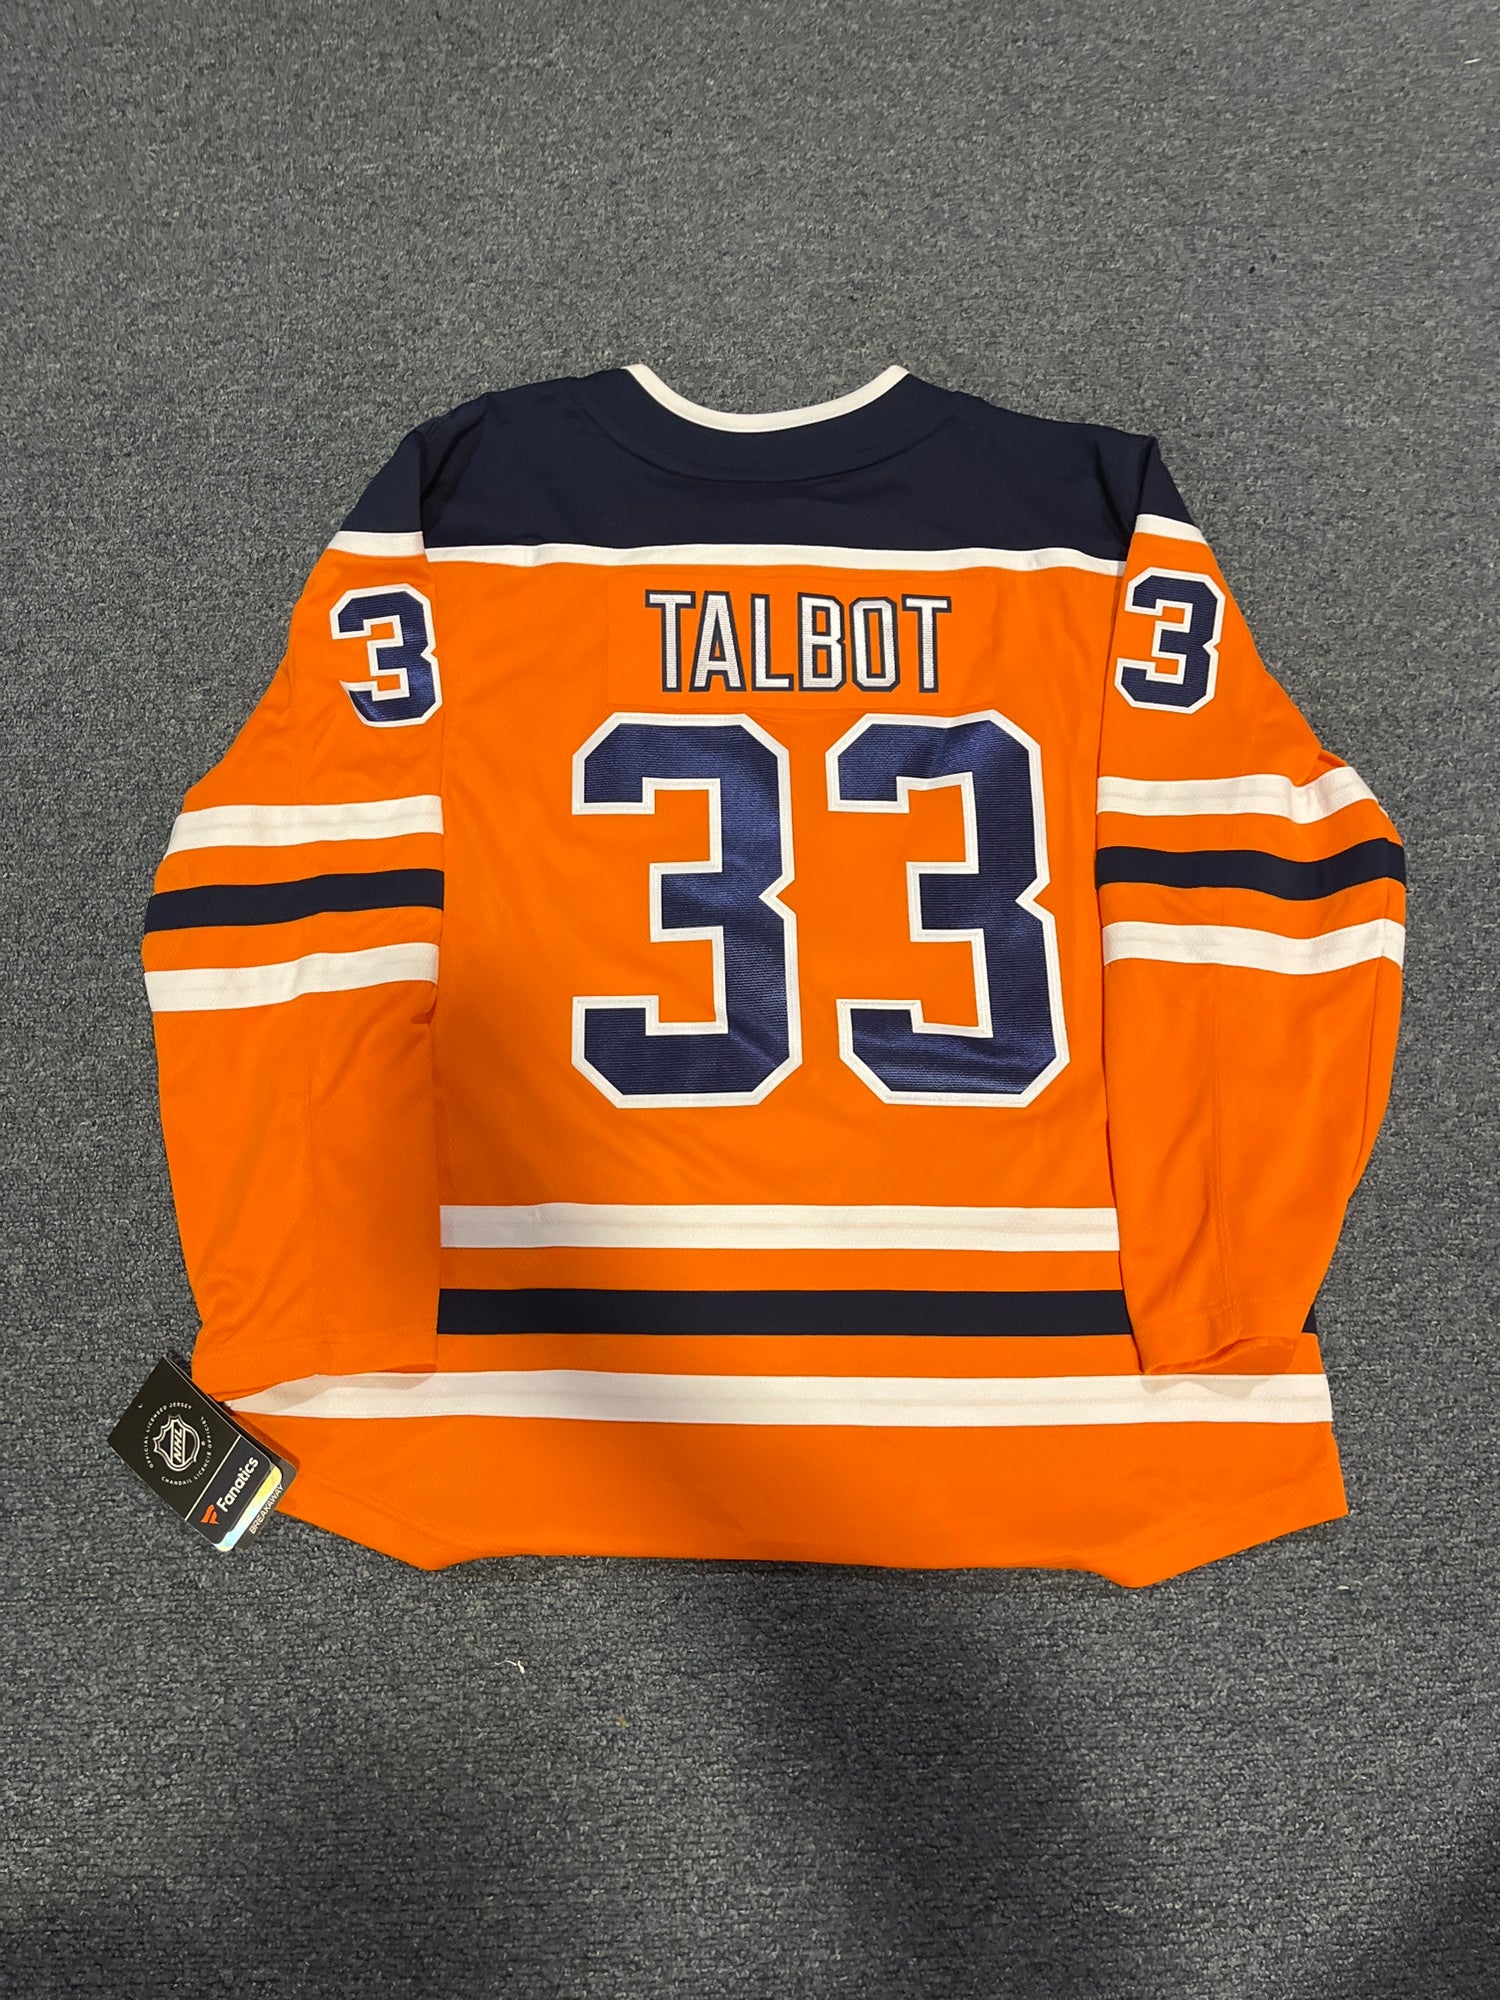 adidas Authentic NHL Edmonton Oilers Jersey Cam Talbot #33